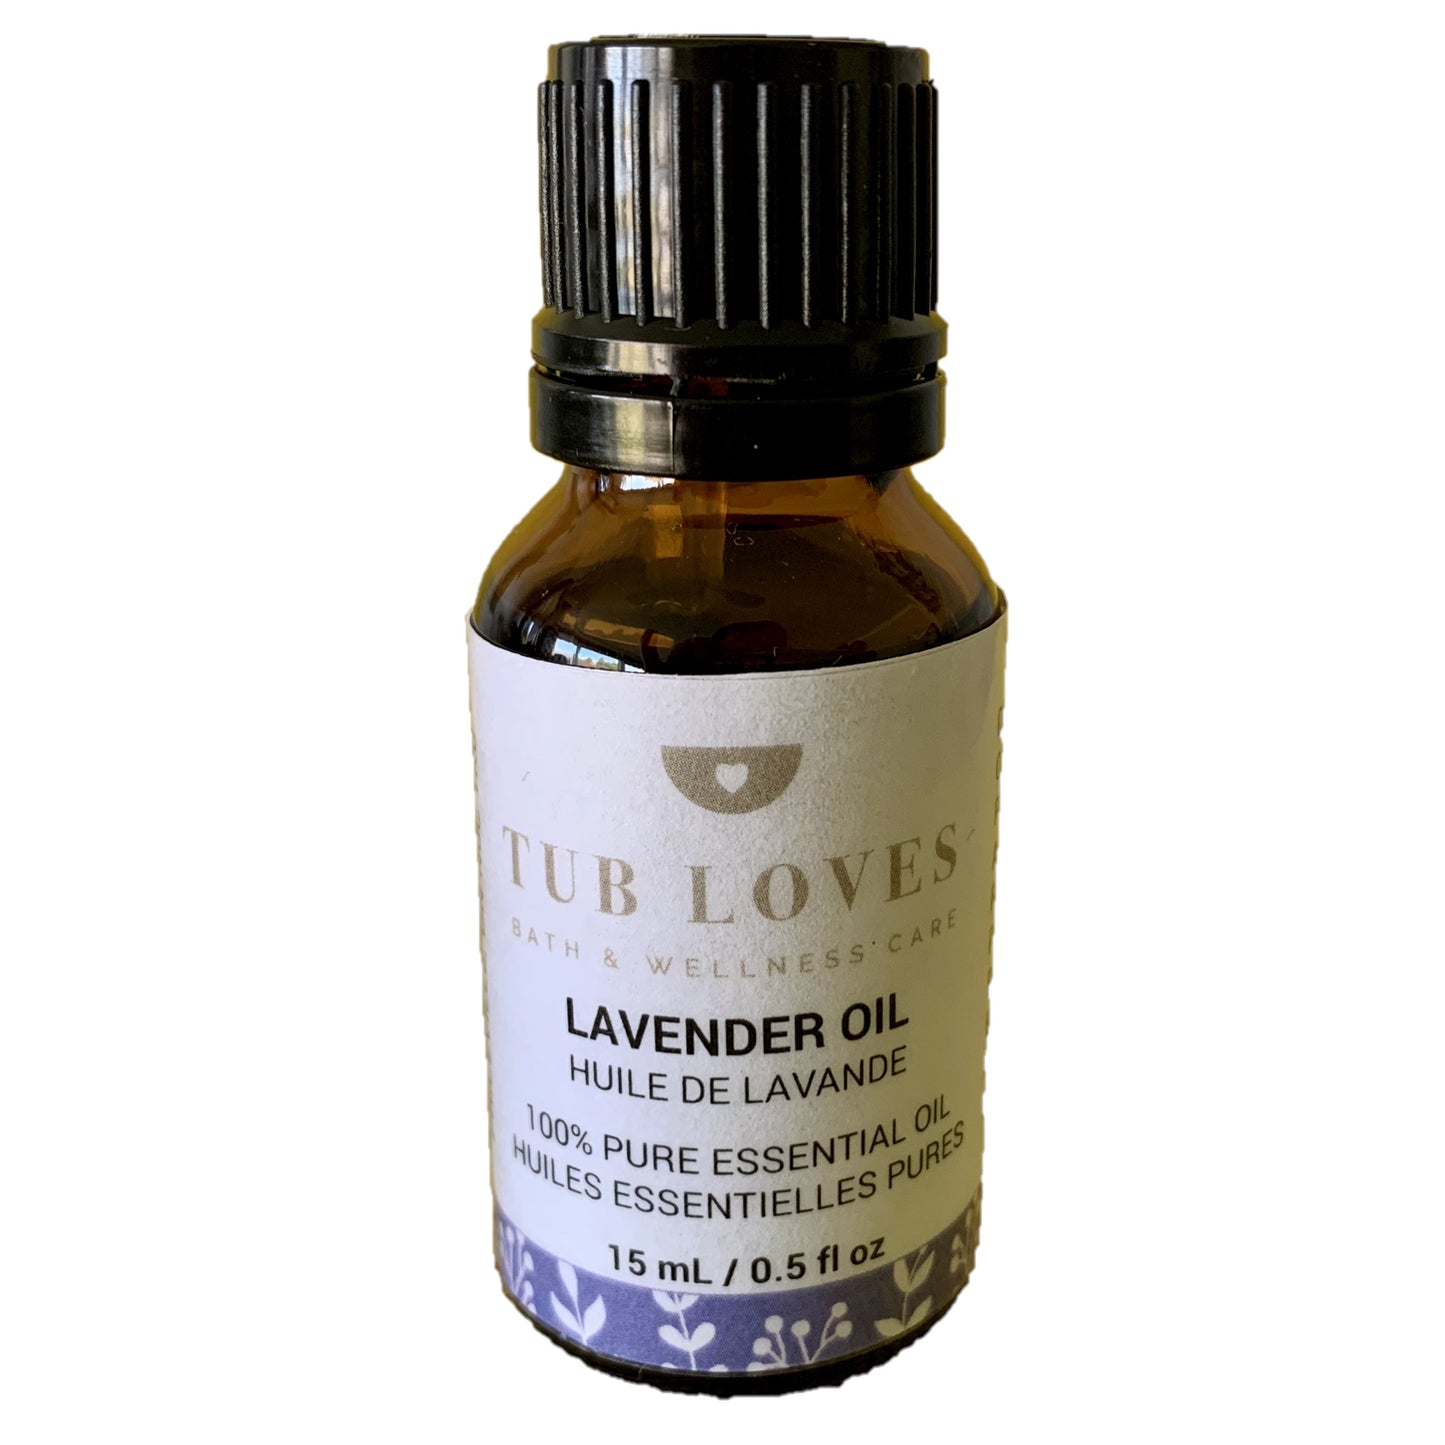 Lavender Essential Oil - Tub Loves